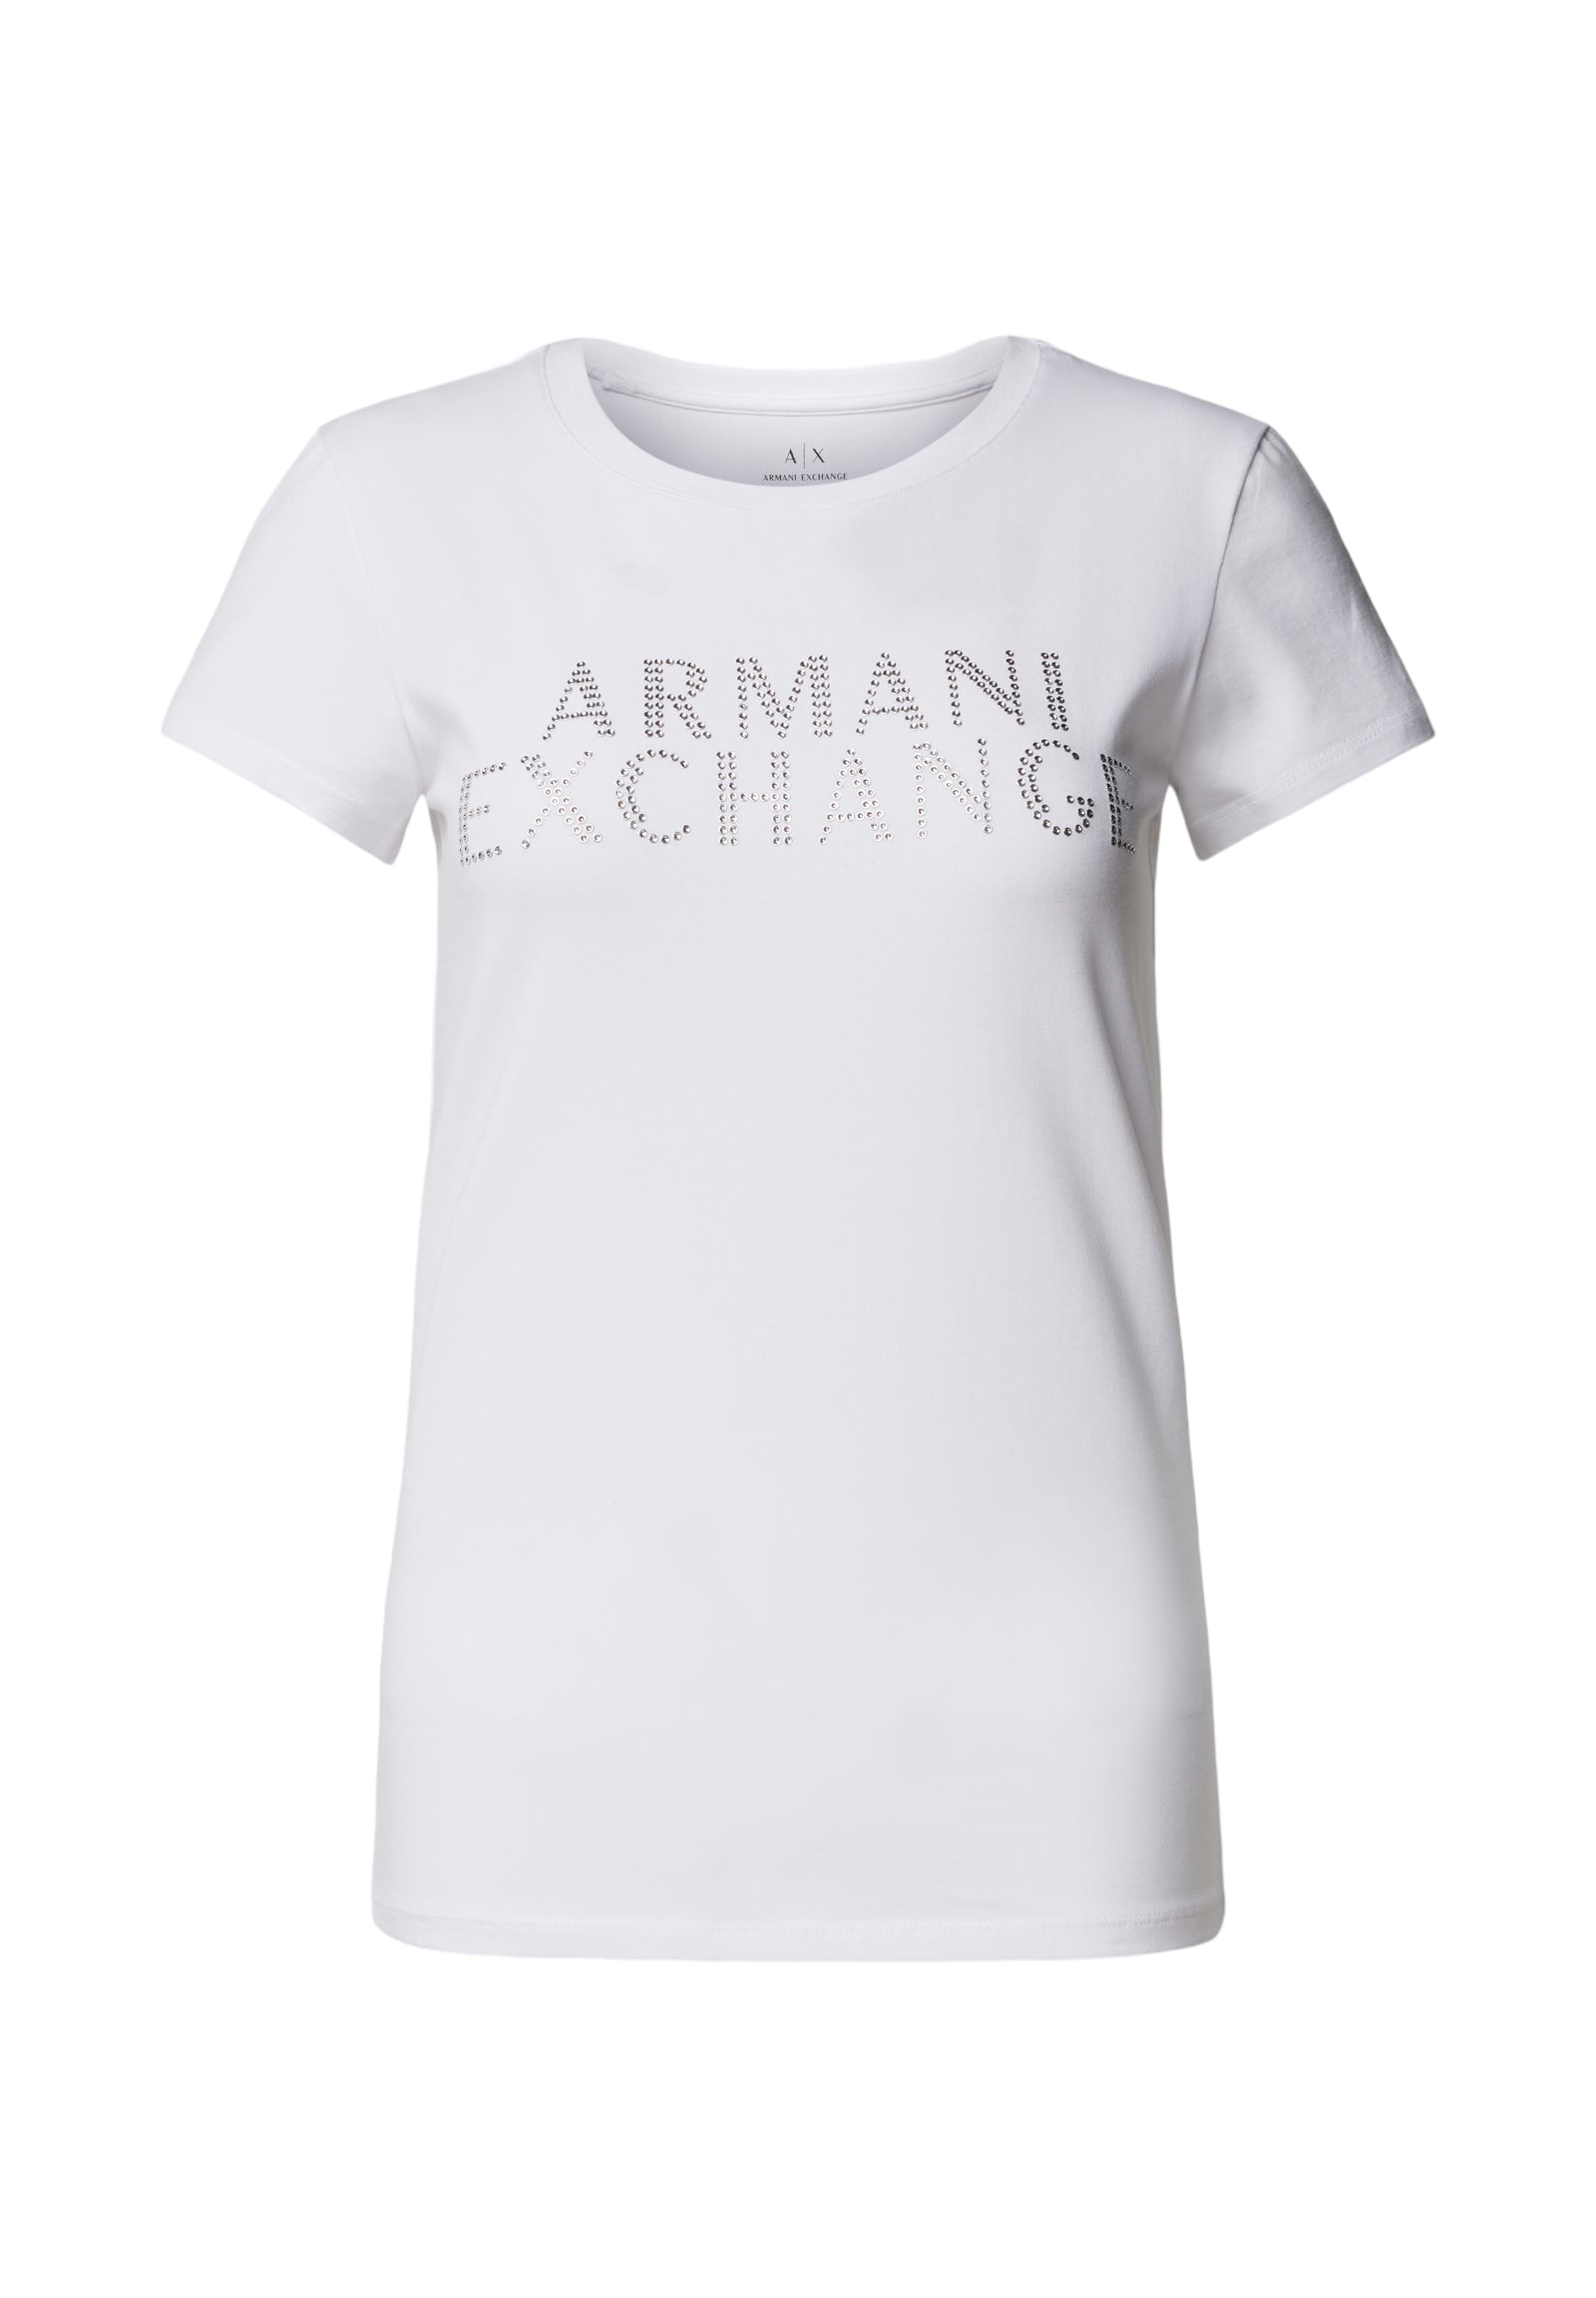 Armani Exchange T-Shirt 6ryt35 Optic White